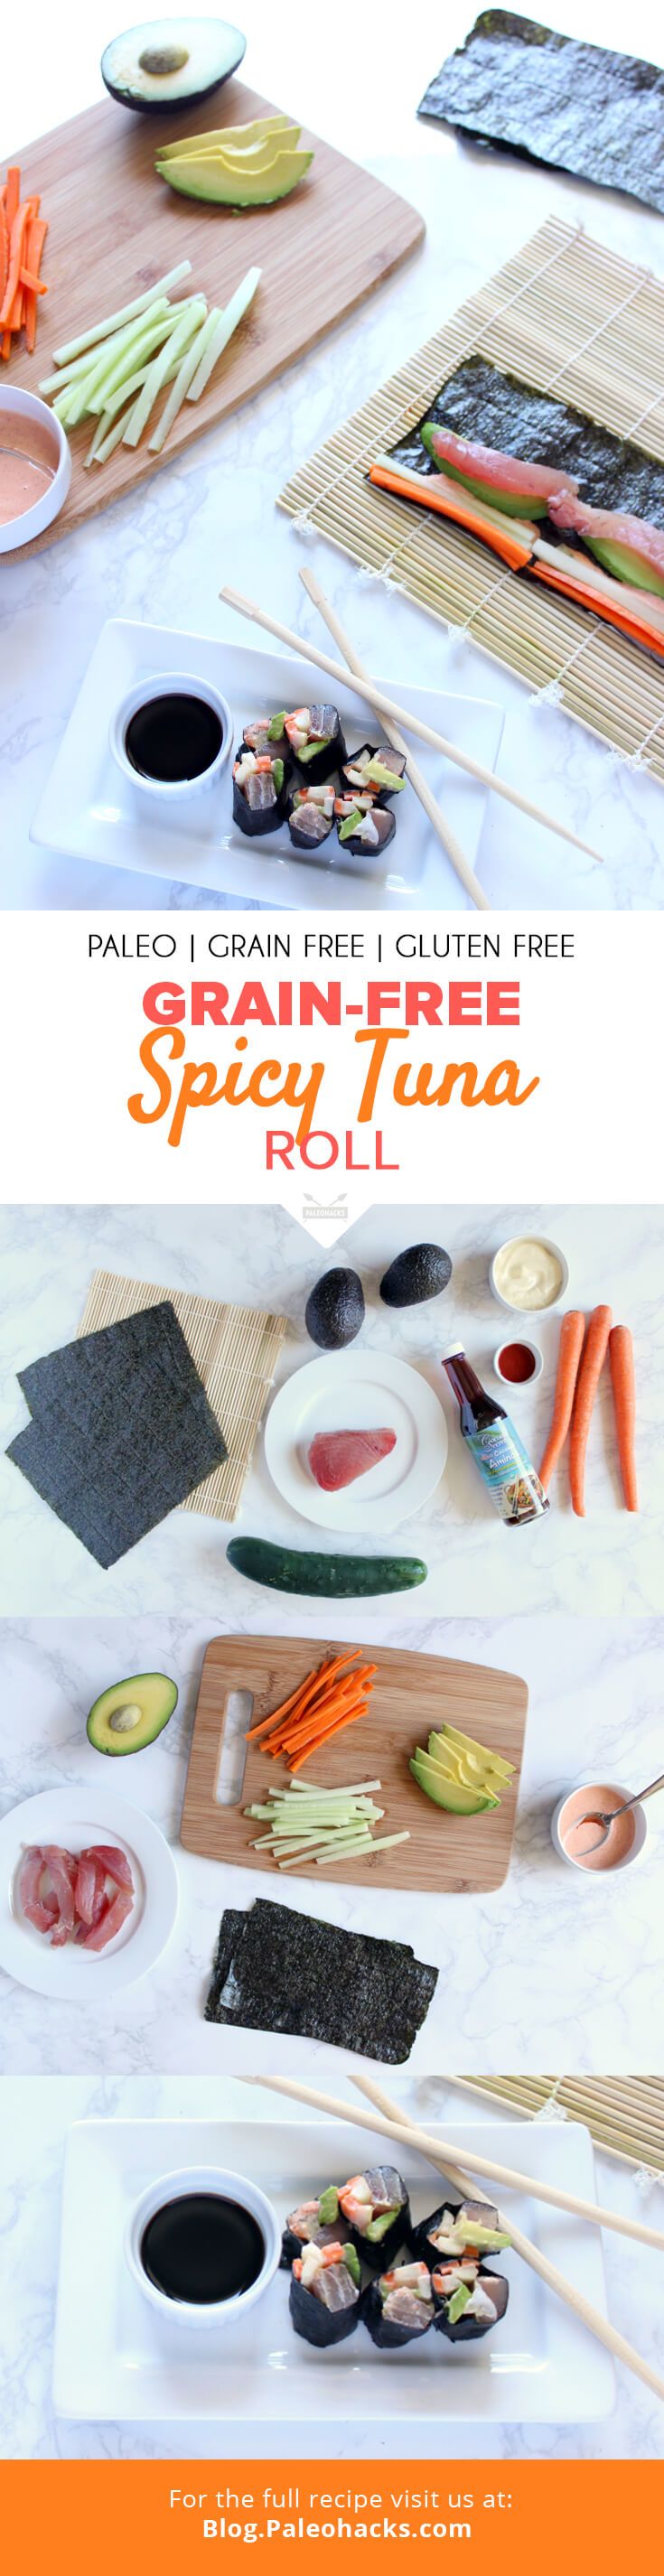 spicy tuna roll pin